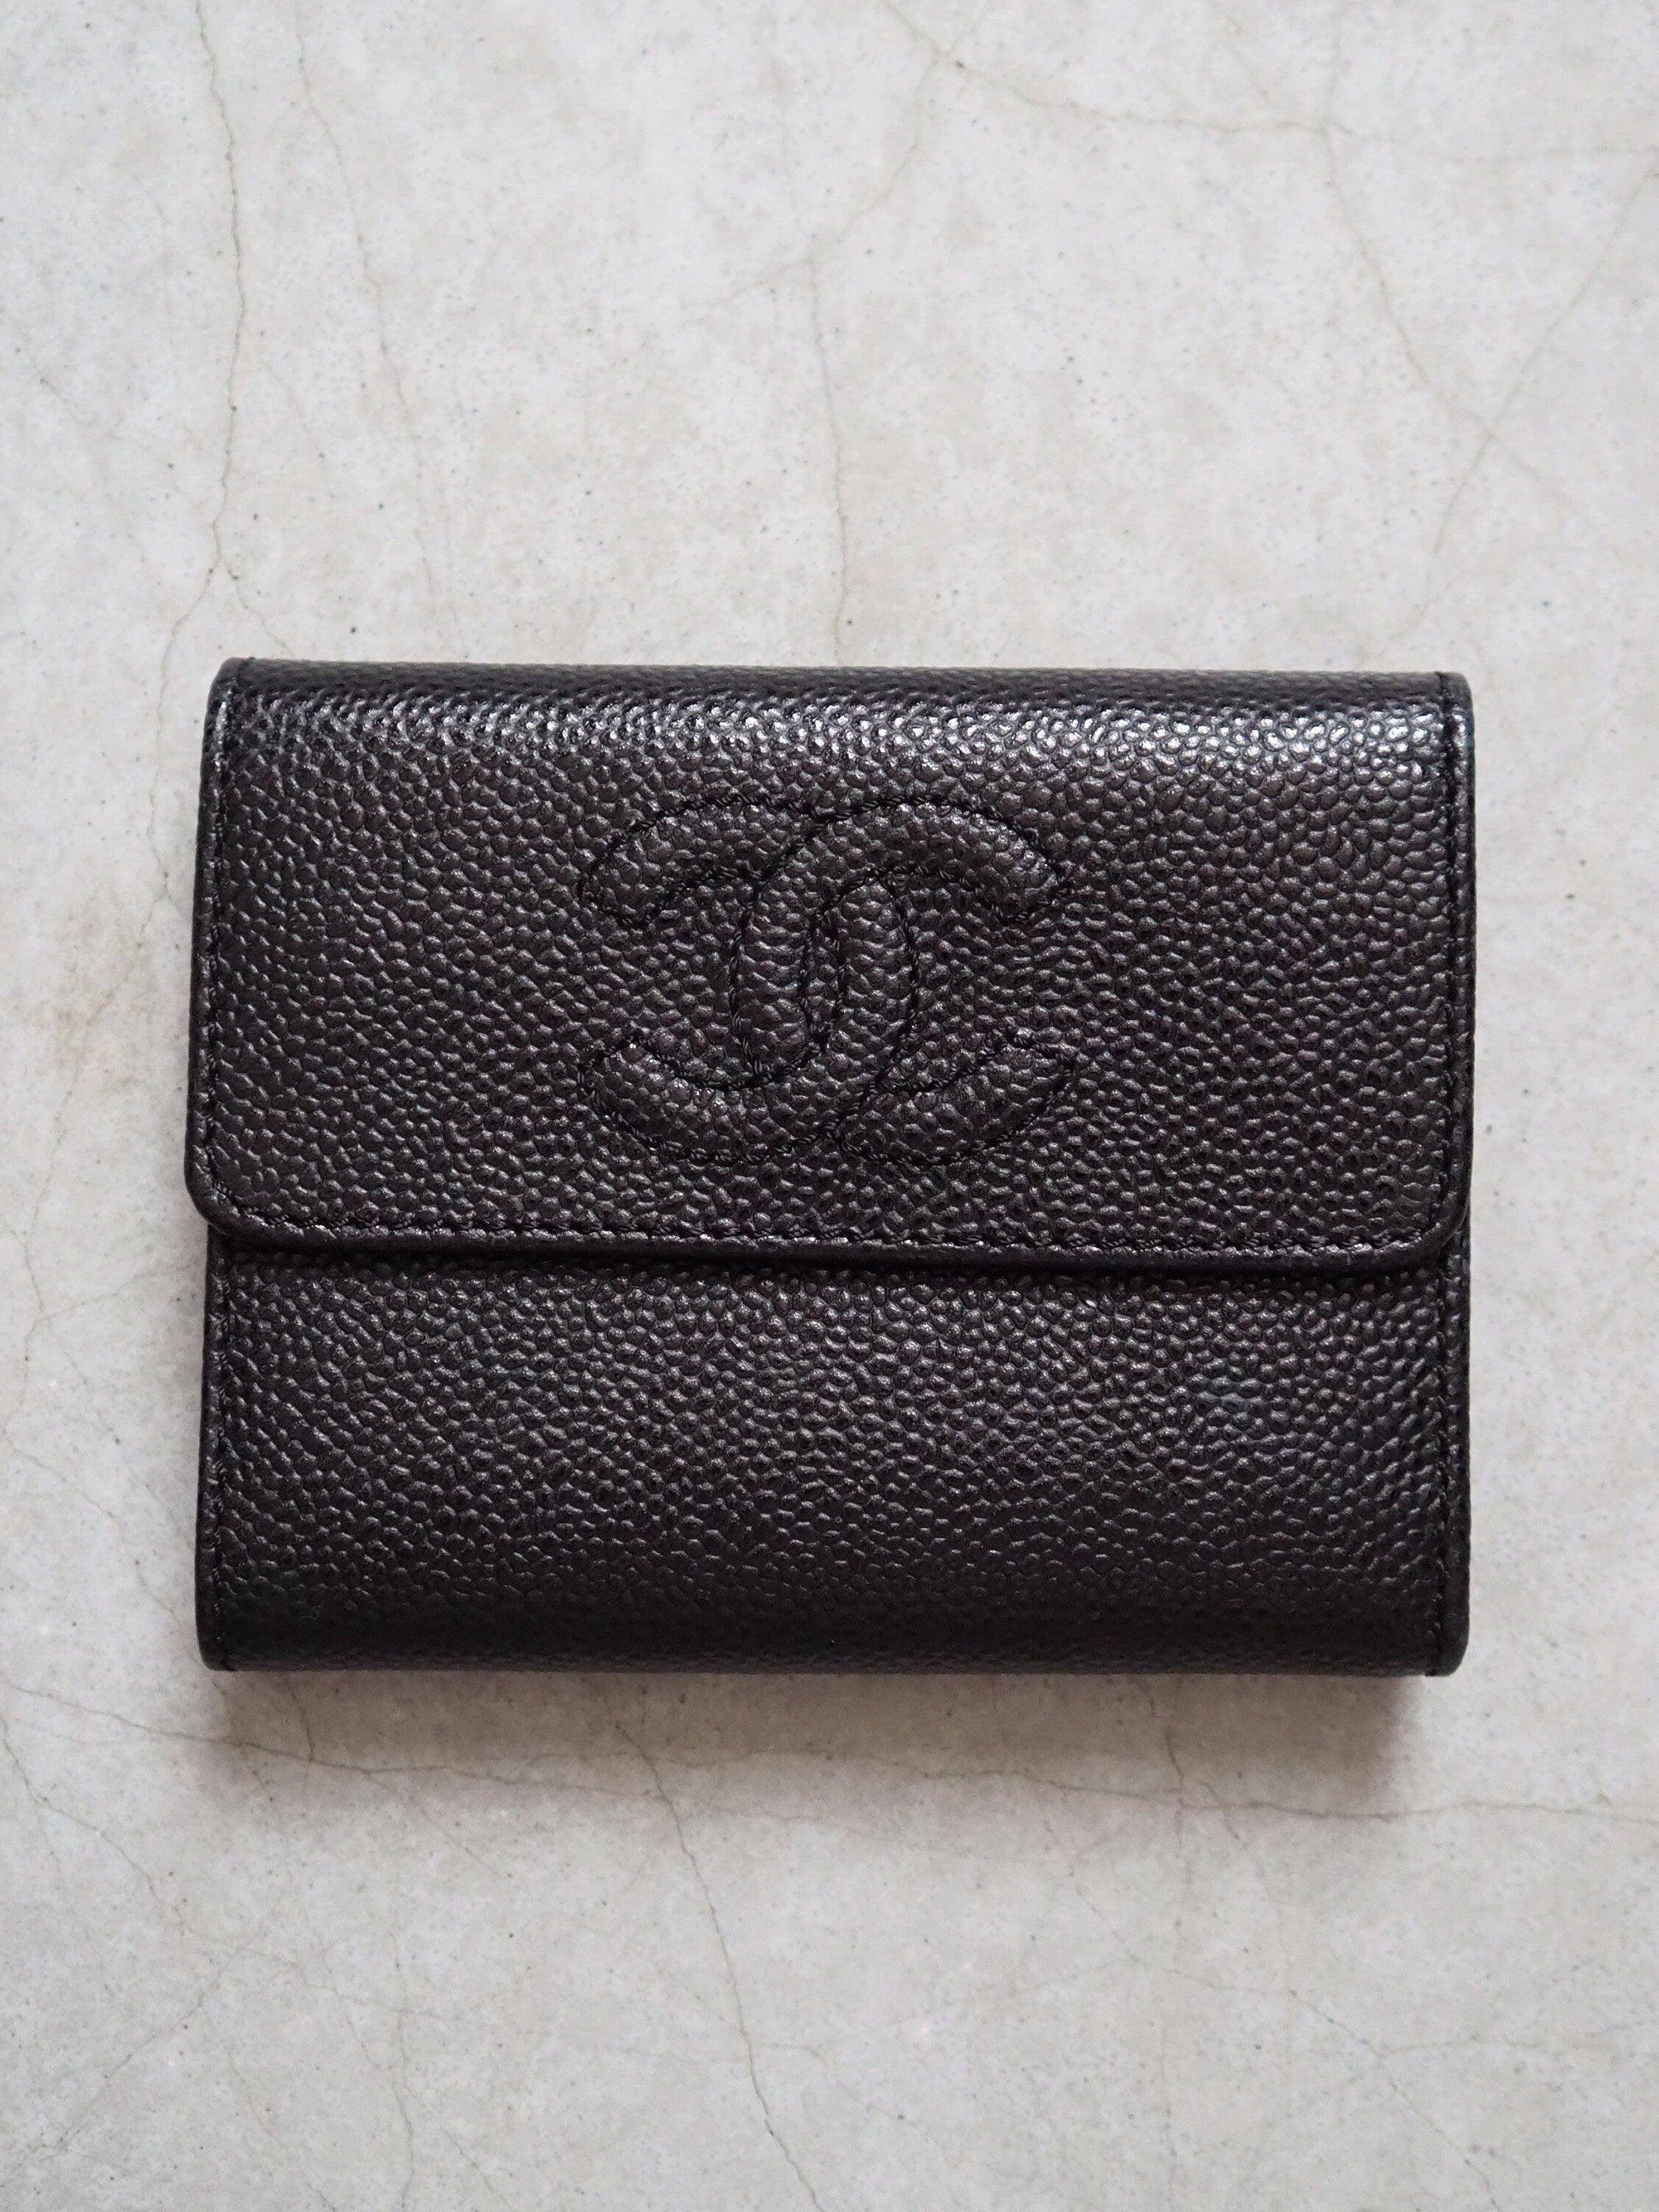 CHANEL COCO Tri-fold Wallet Purse Caviar Skin Leather Black Authentic Vintage Box